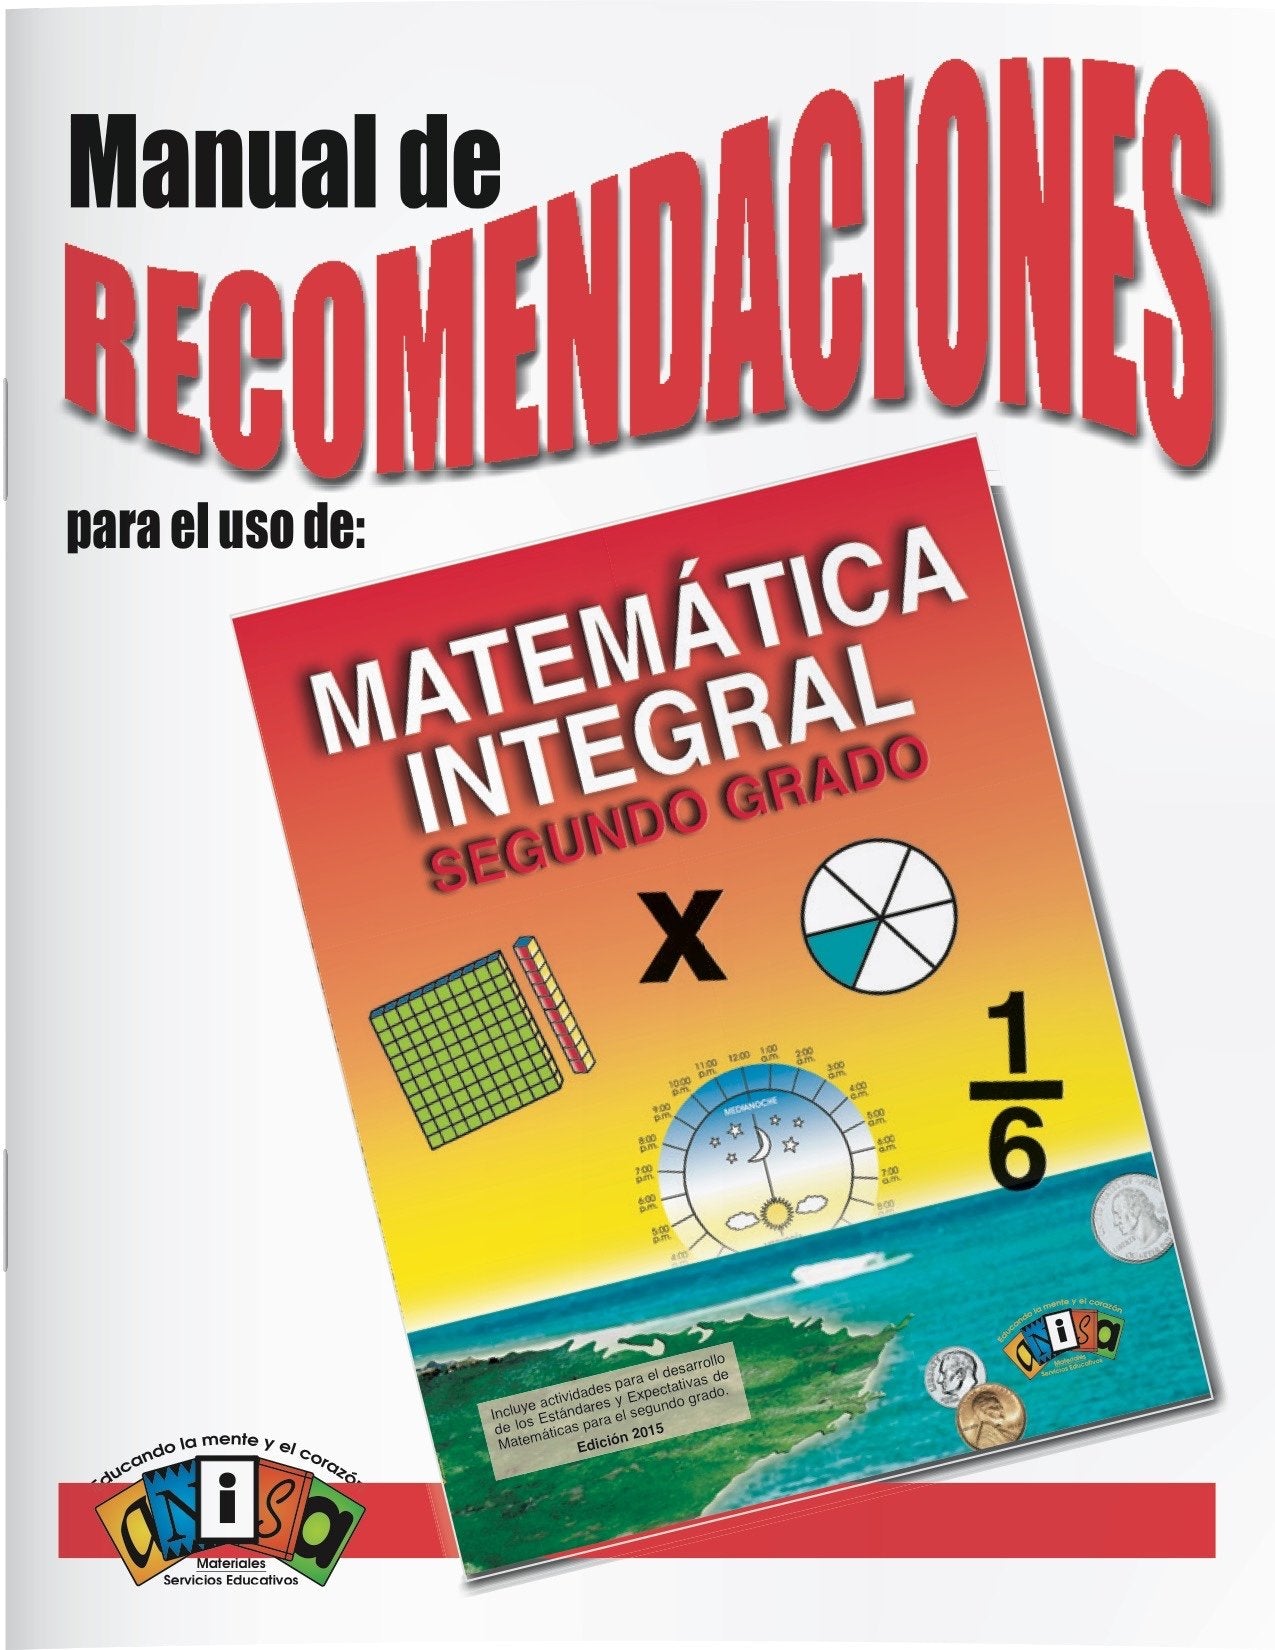 AM-L011G Matemática Integral - 2do Grado (Manual de recomendac